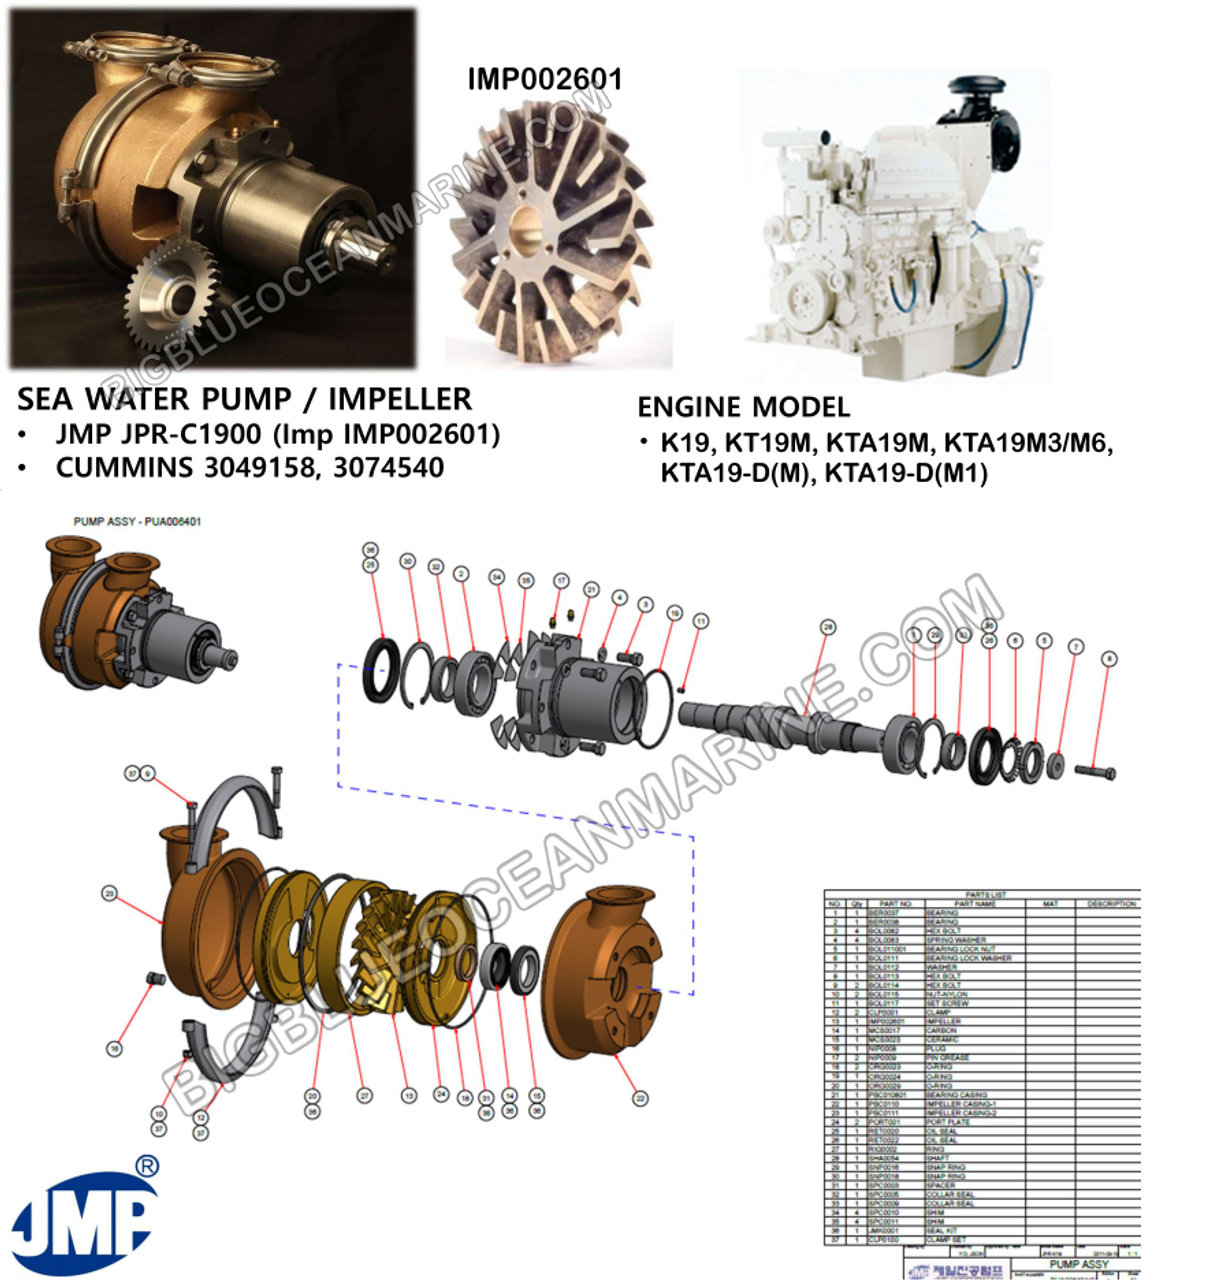 JMP BRONZE IMPELLER #IMP002601
(Exploded View Parts Illustration JPR-C1900)